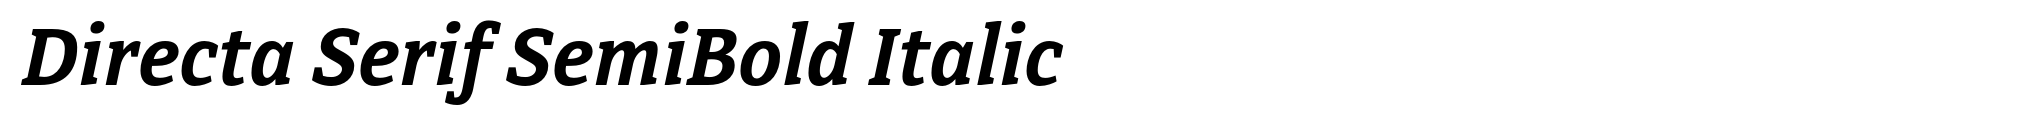 Directa Serif SemiBold Italic image